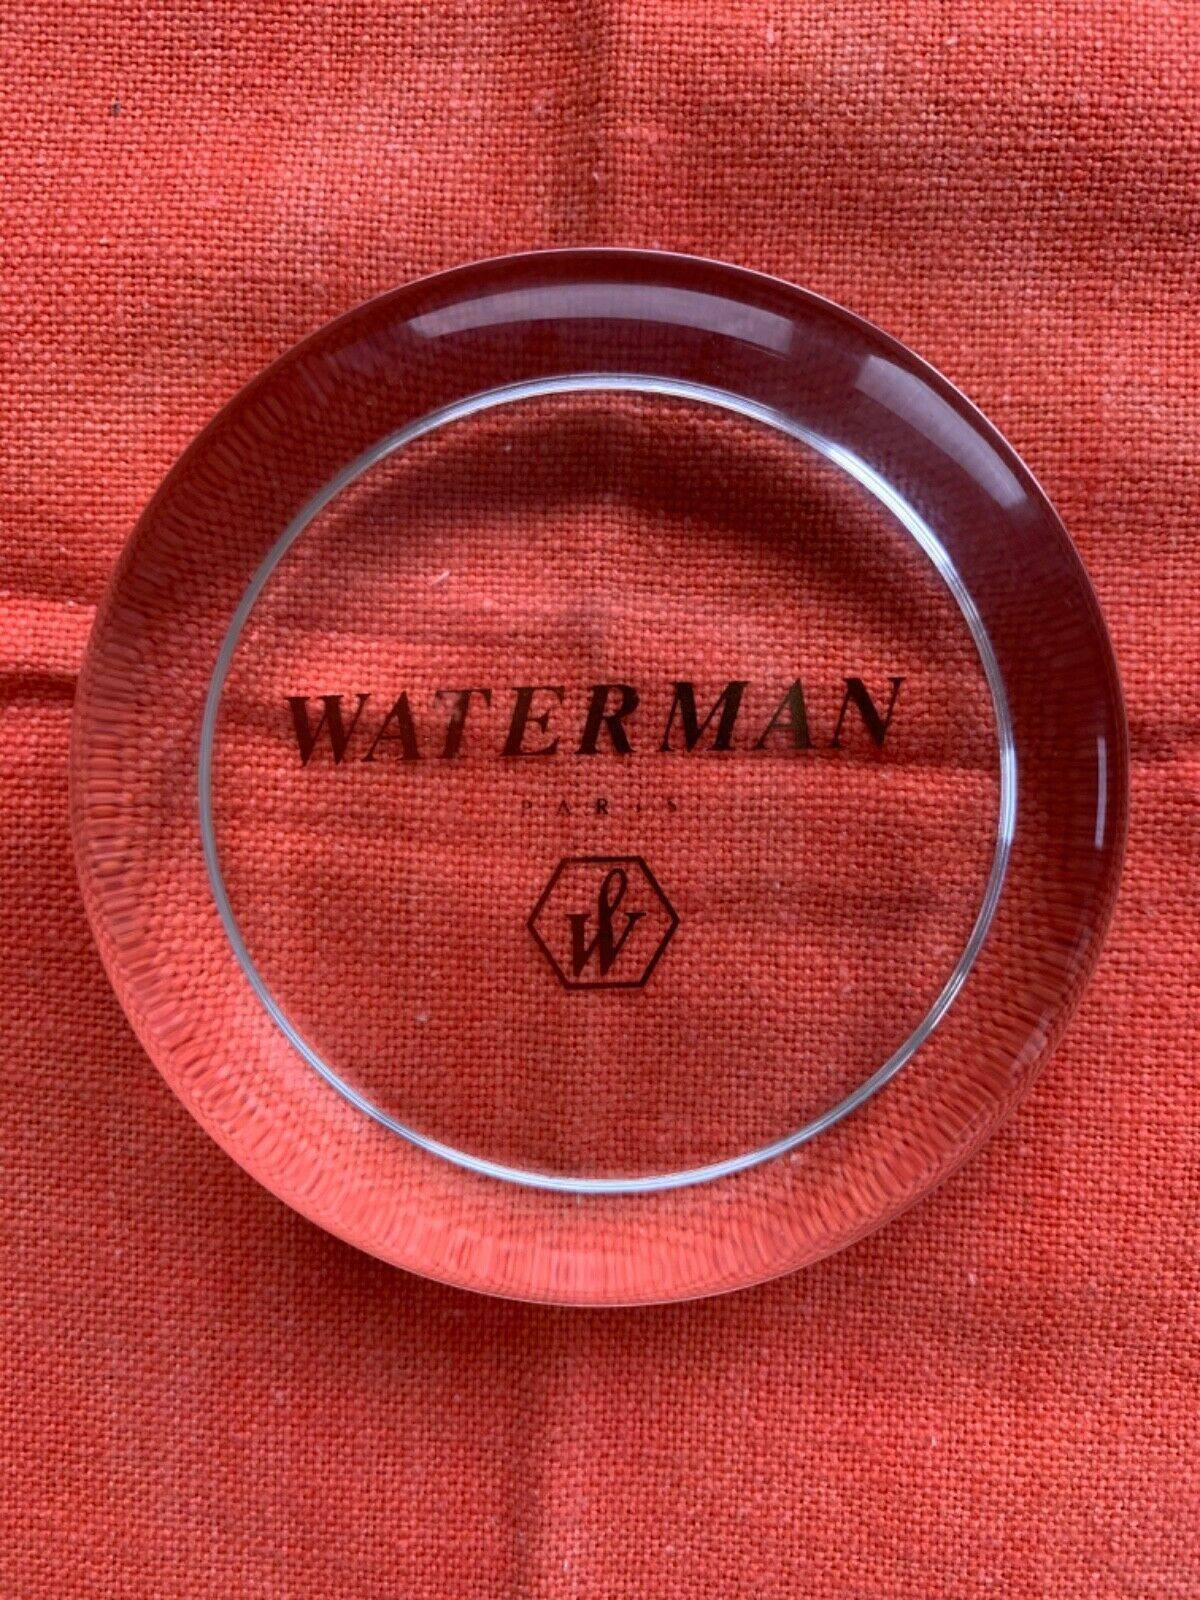 waterman pisapapeles vidrio.jpg